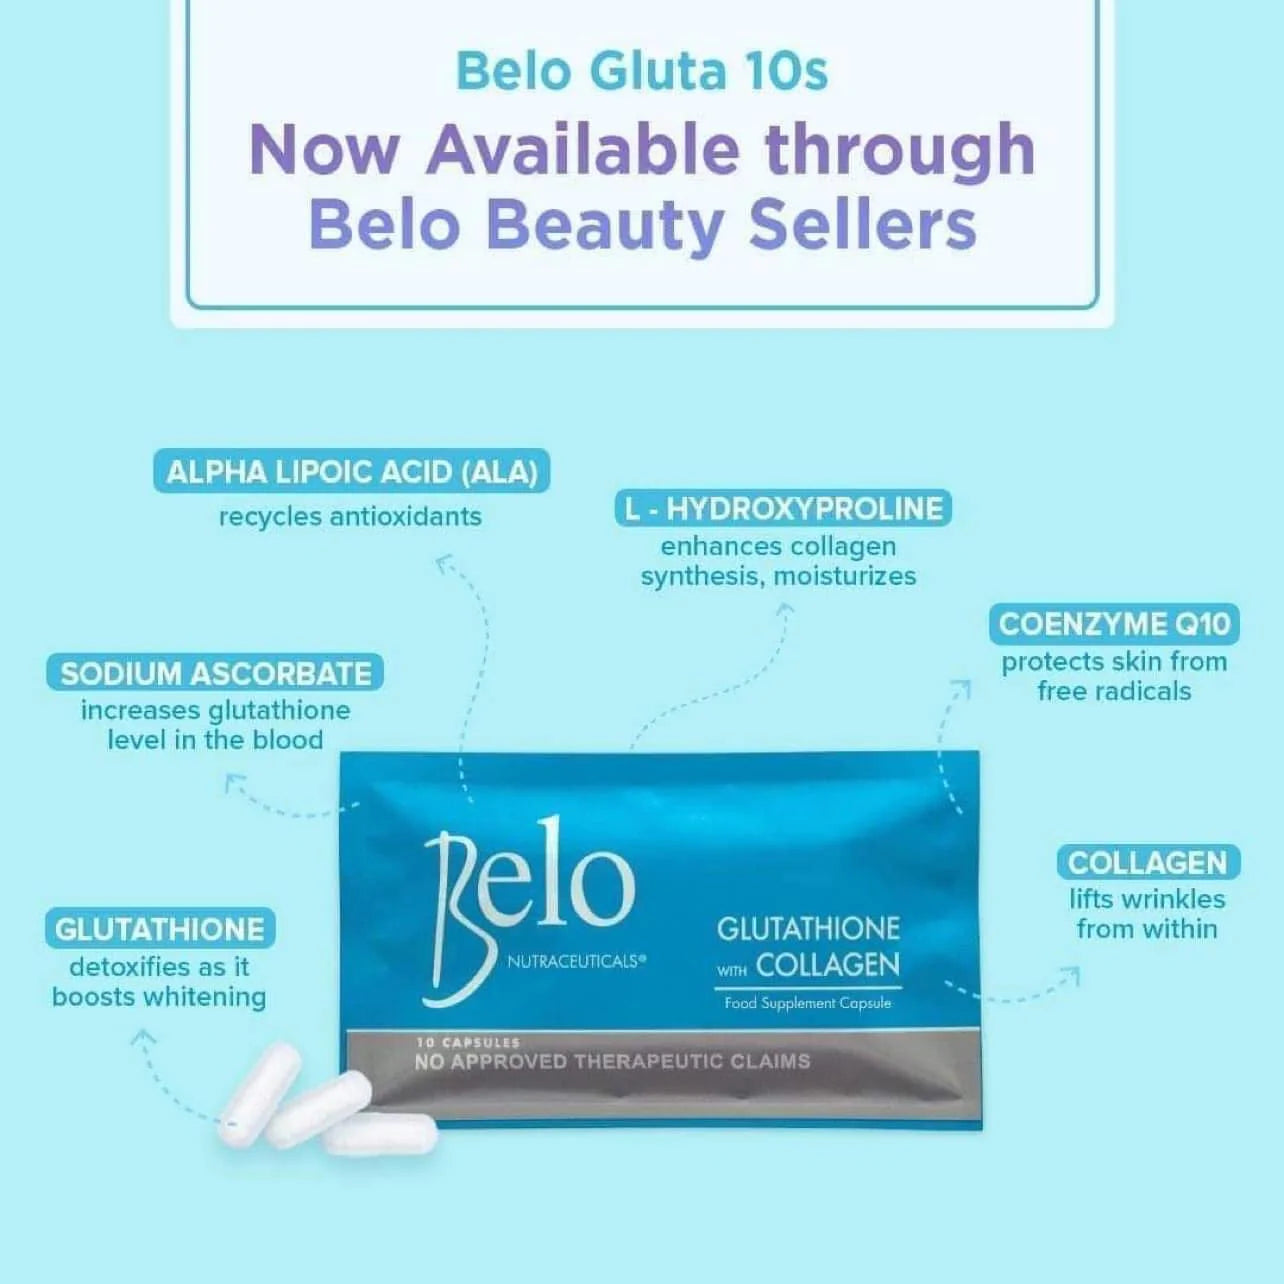 Belo Nutraceuticals Glutathione with Collagen 30 capsules